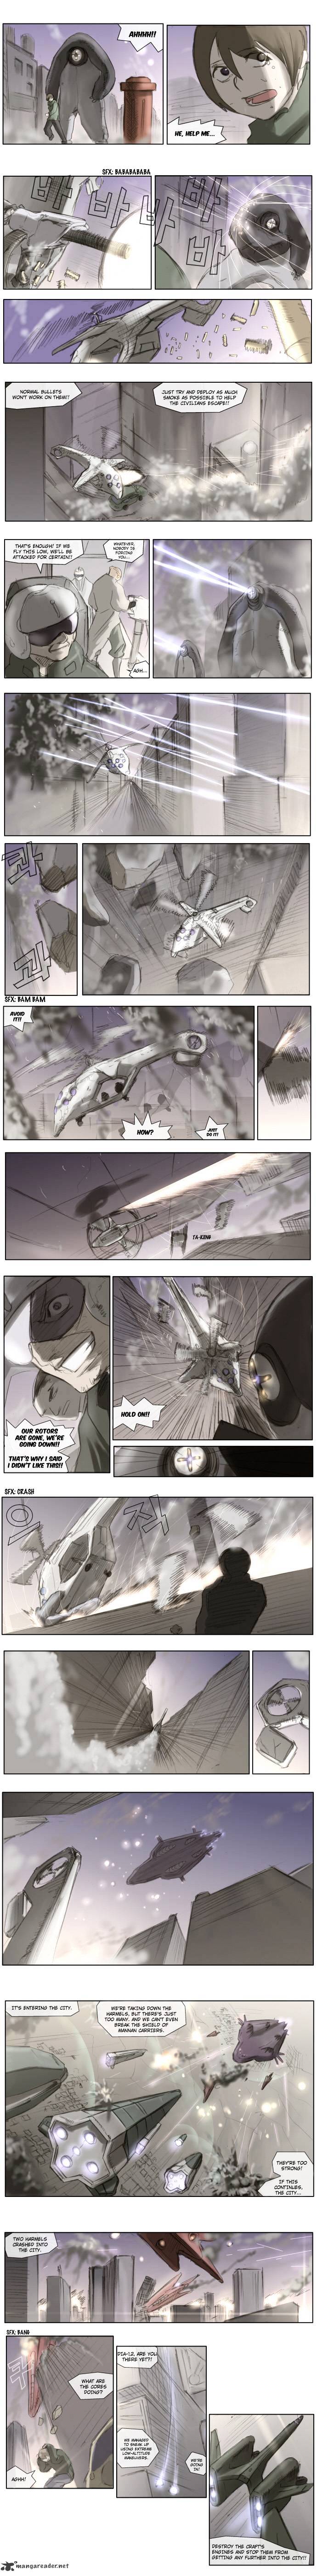 Knight Run - Page 2